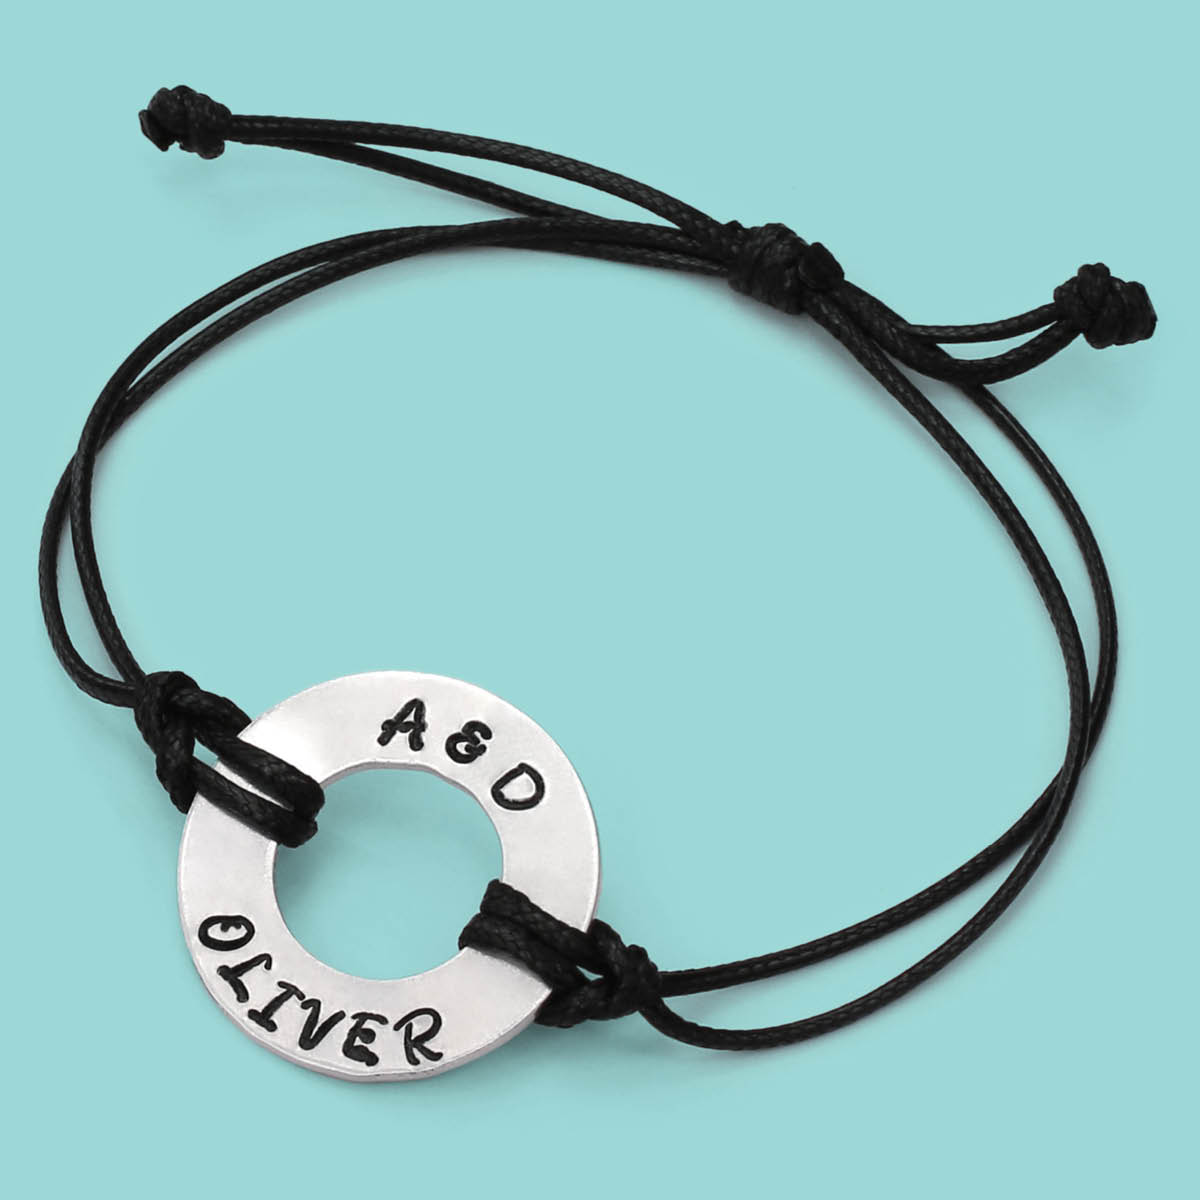 DIY Metal Stamped Washer Bracelets for Homemade Gifts